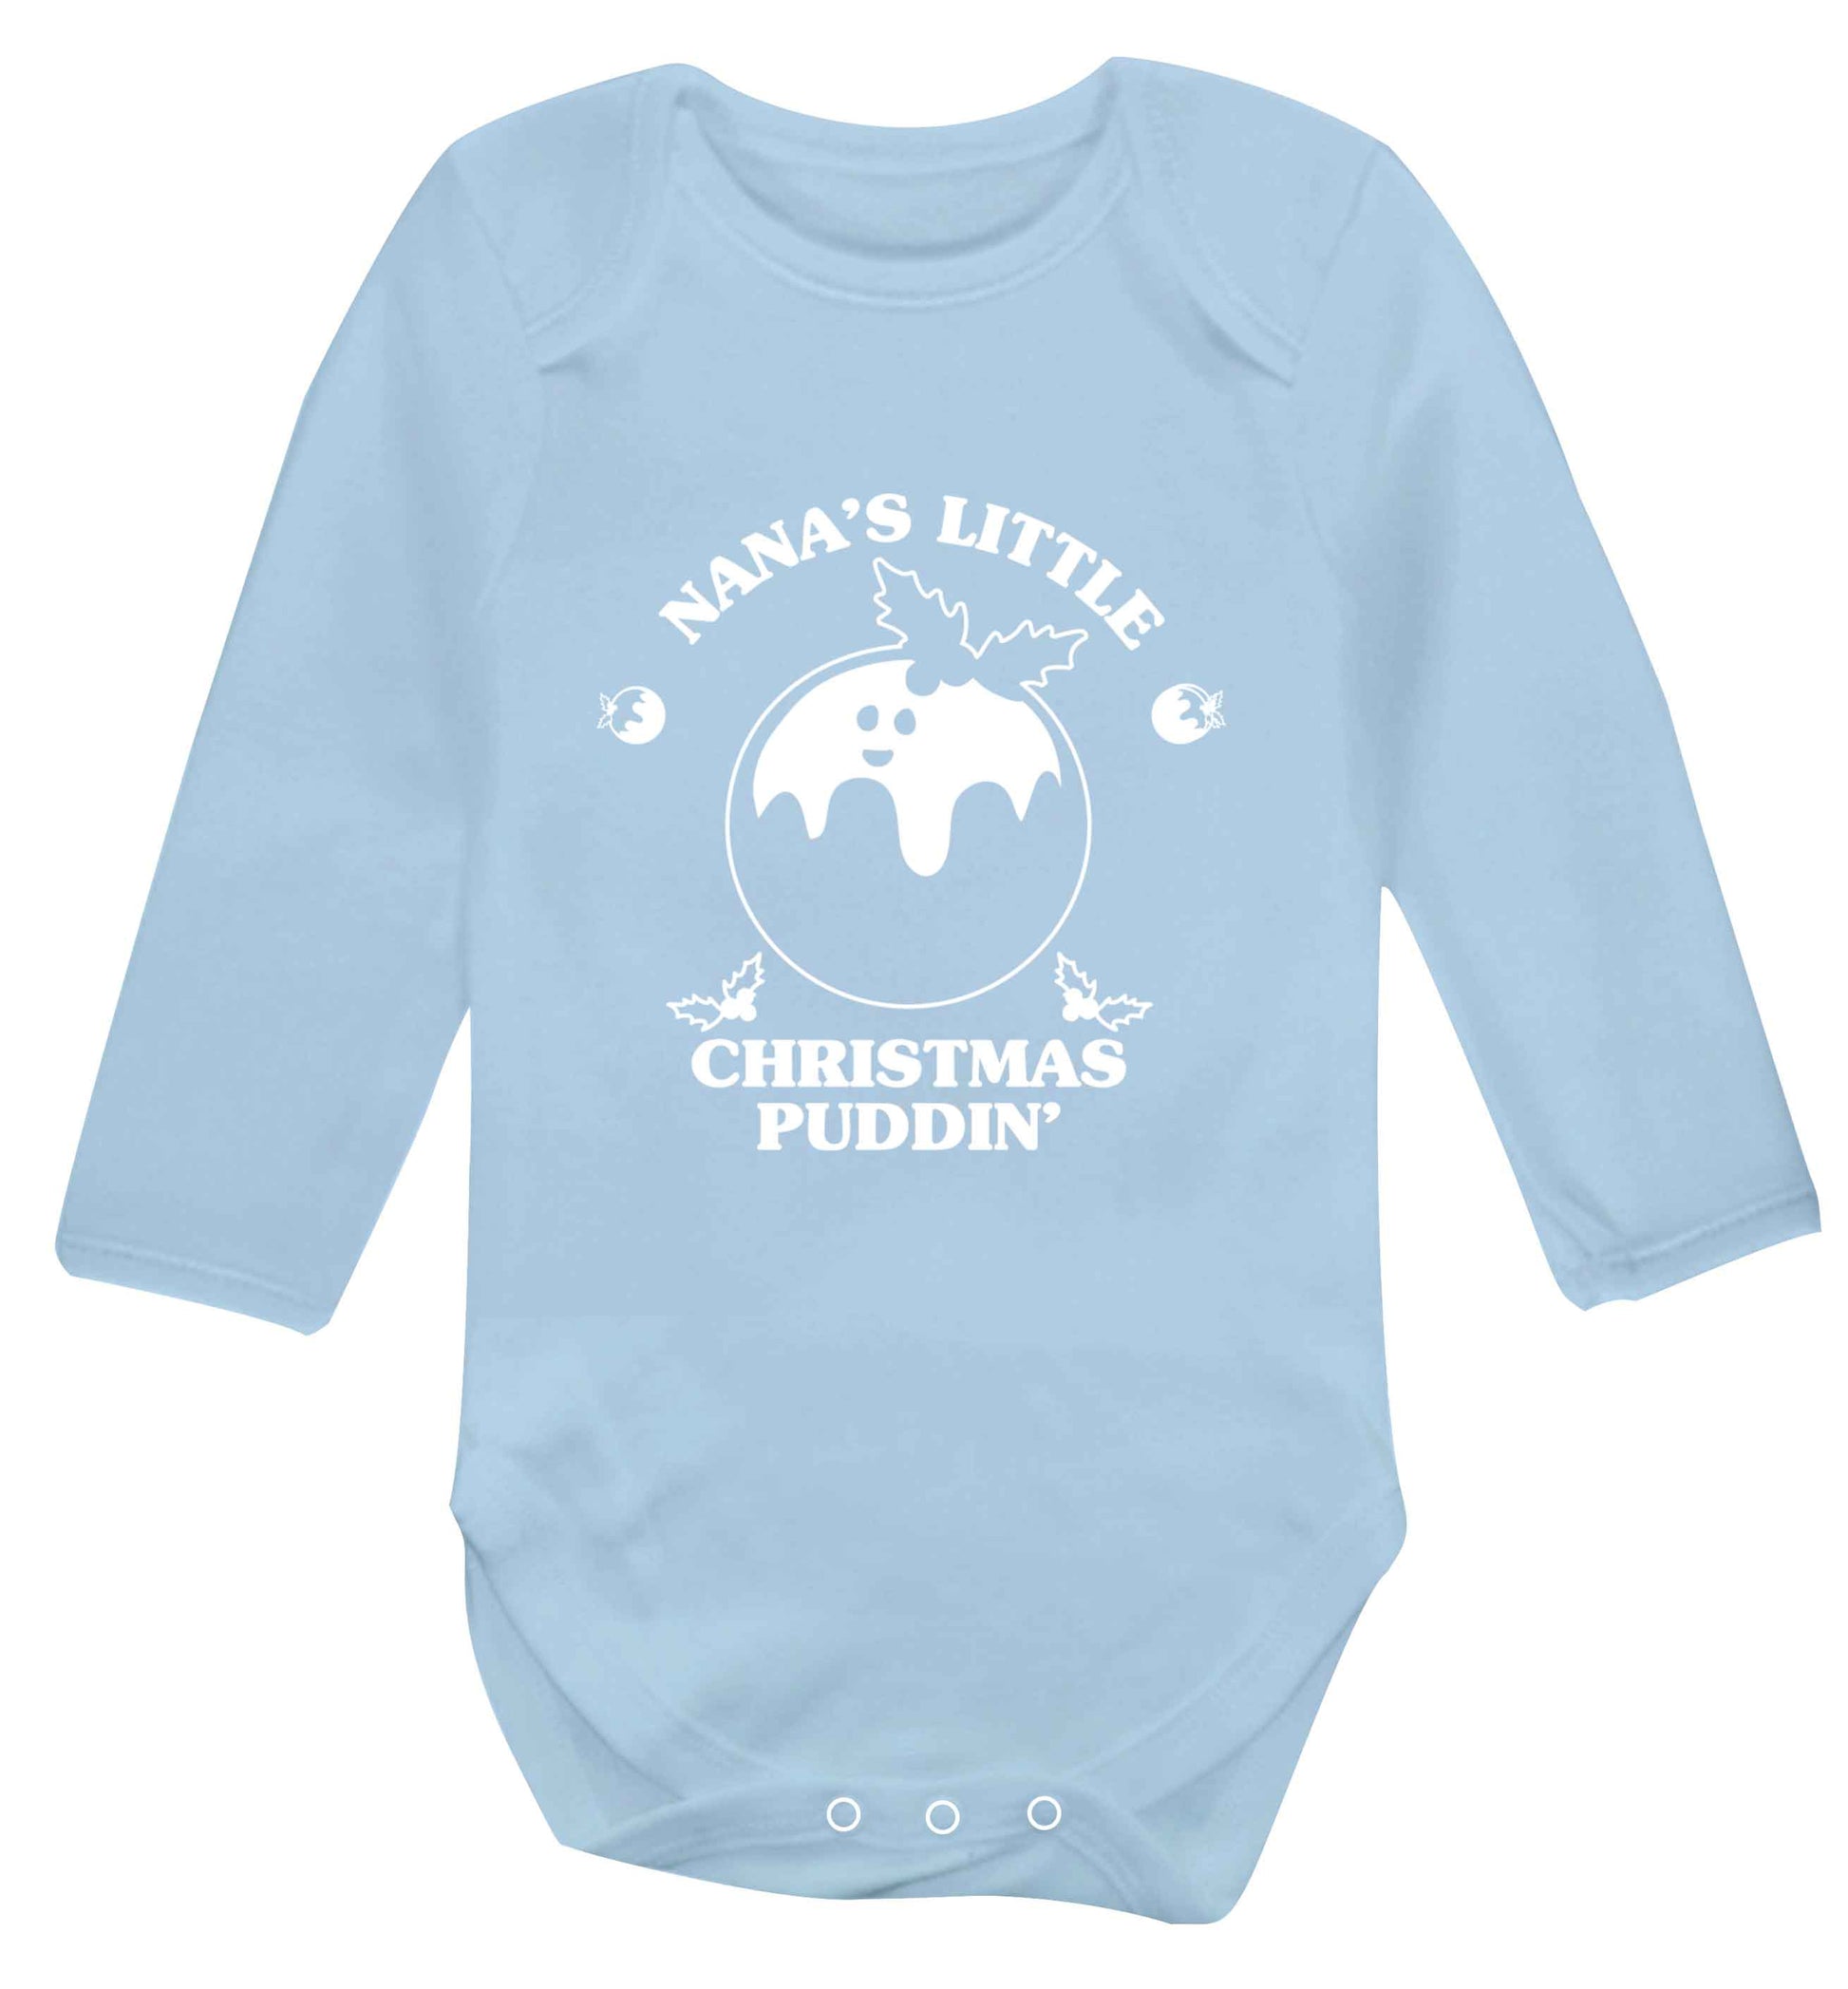 Nana's little Christmas puddin' Baby Vest long sleeved pale blue 6-12 months